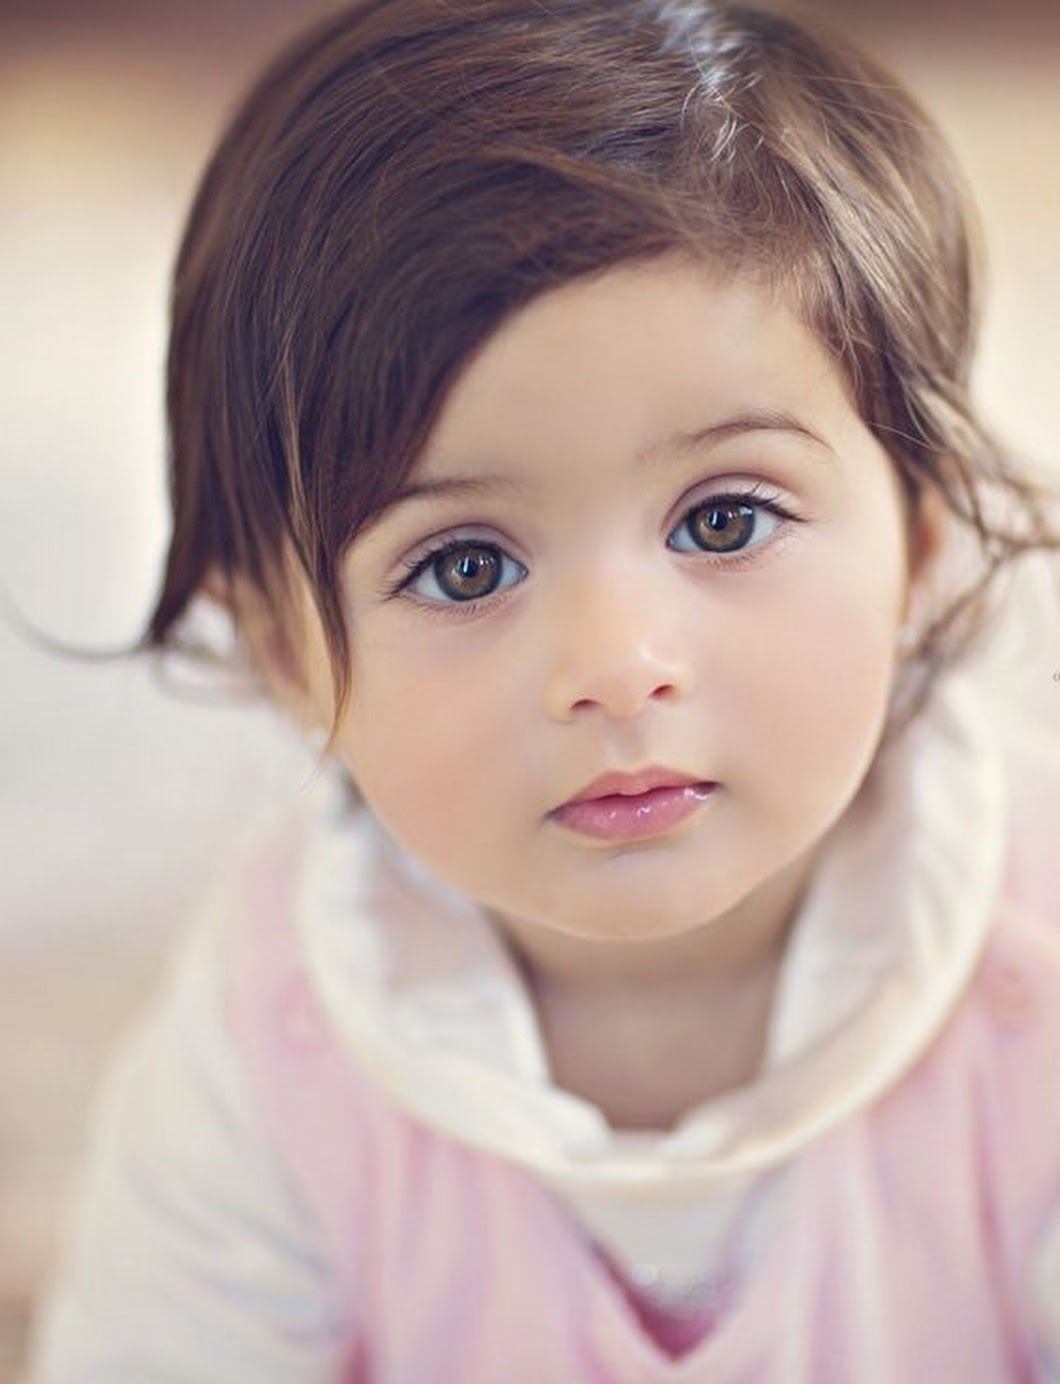 Sign in. Cute baby girl wallpaper, Cute little baby girl, Cute baby girl image